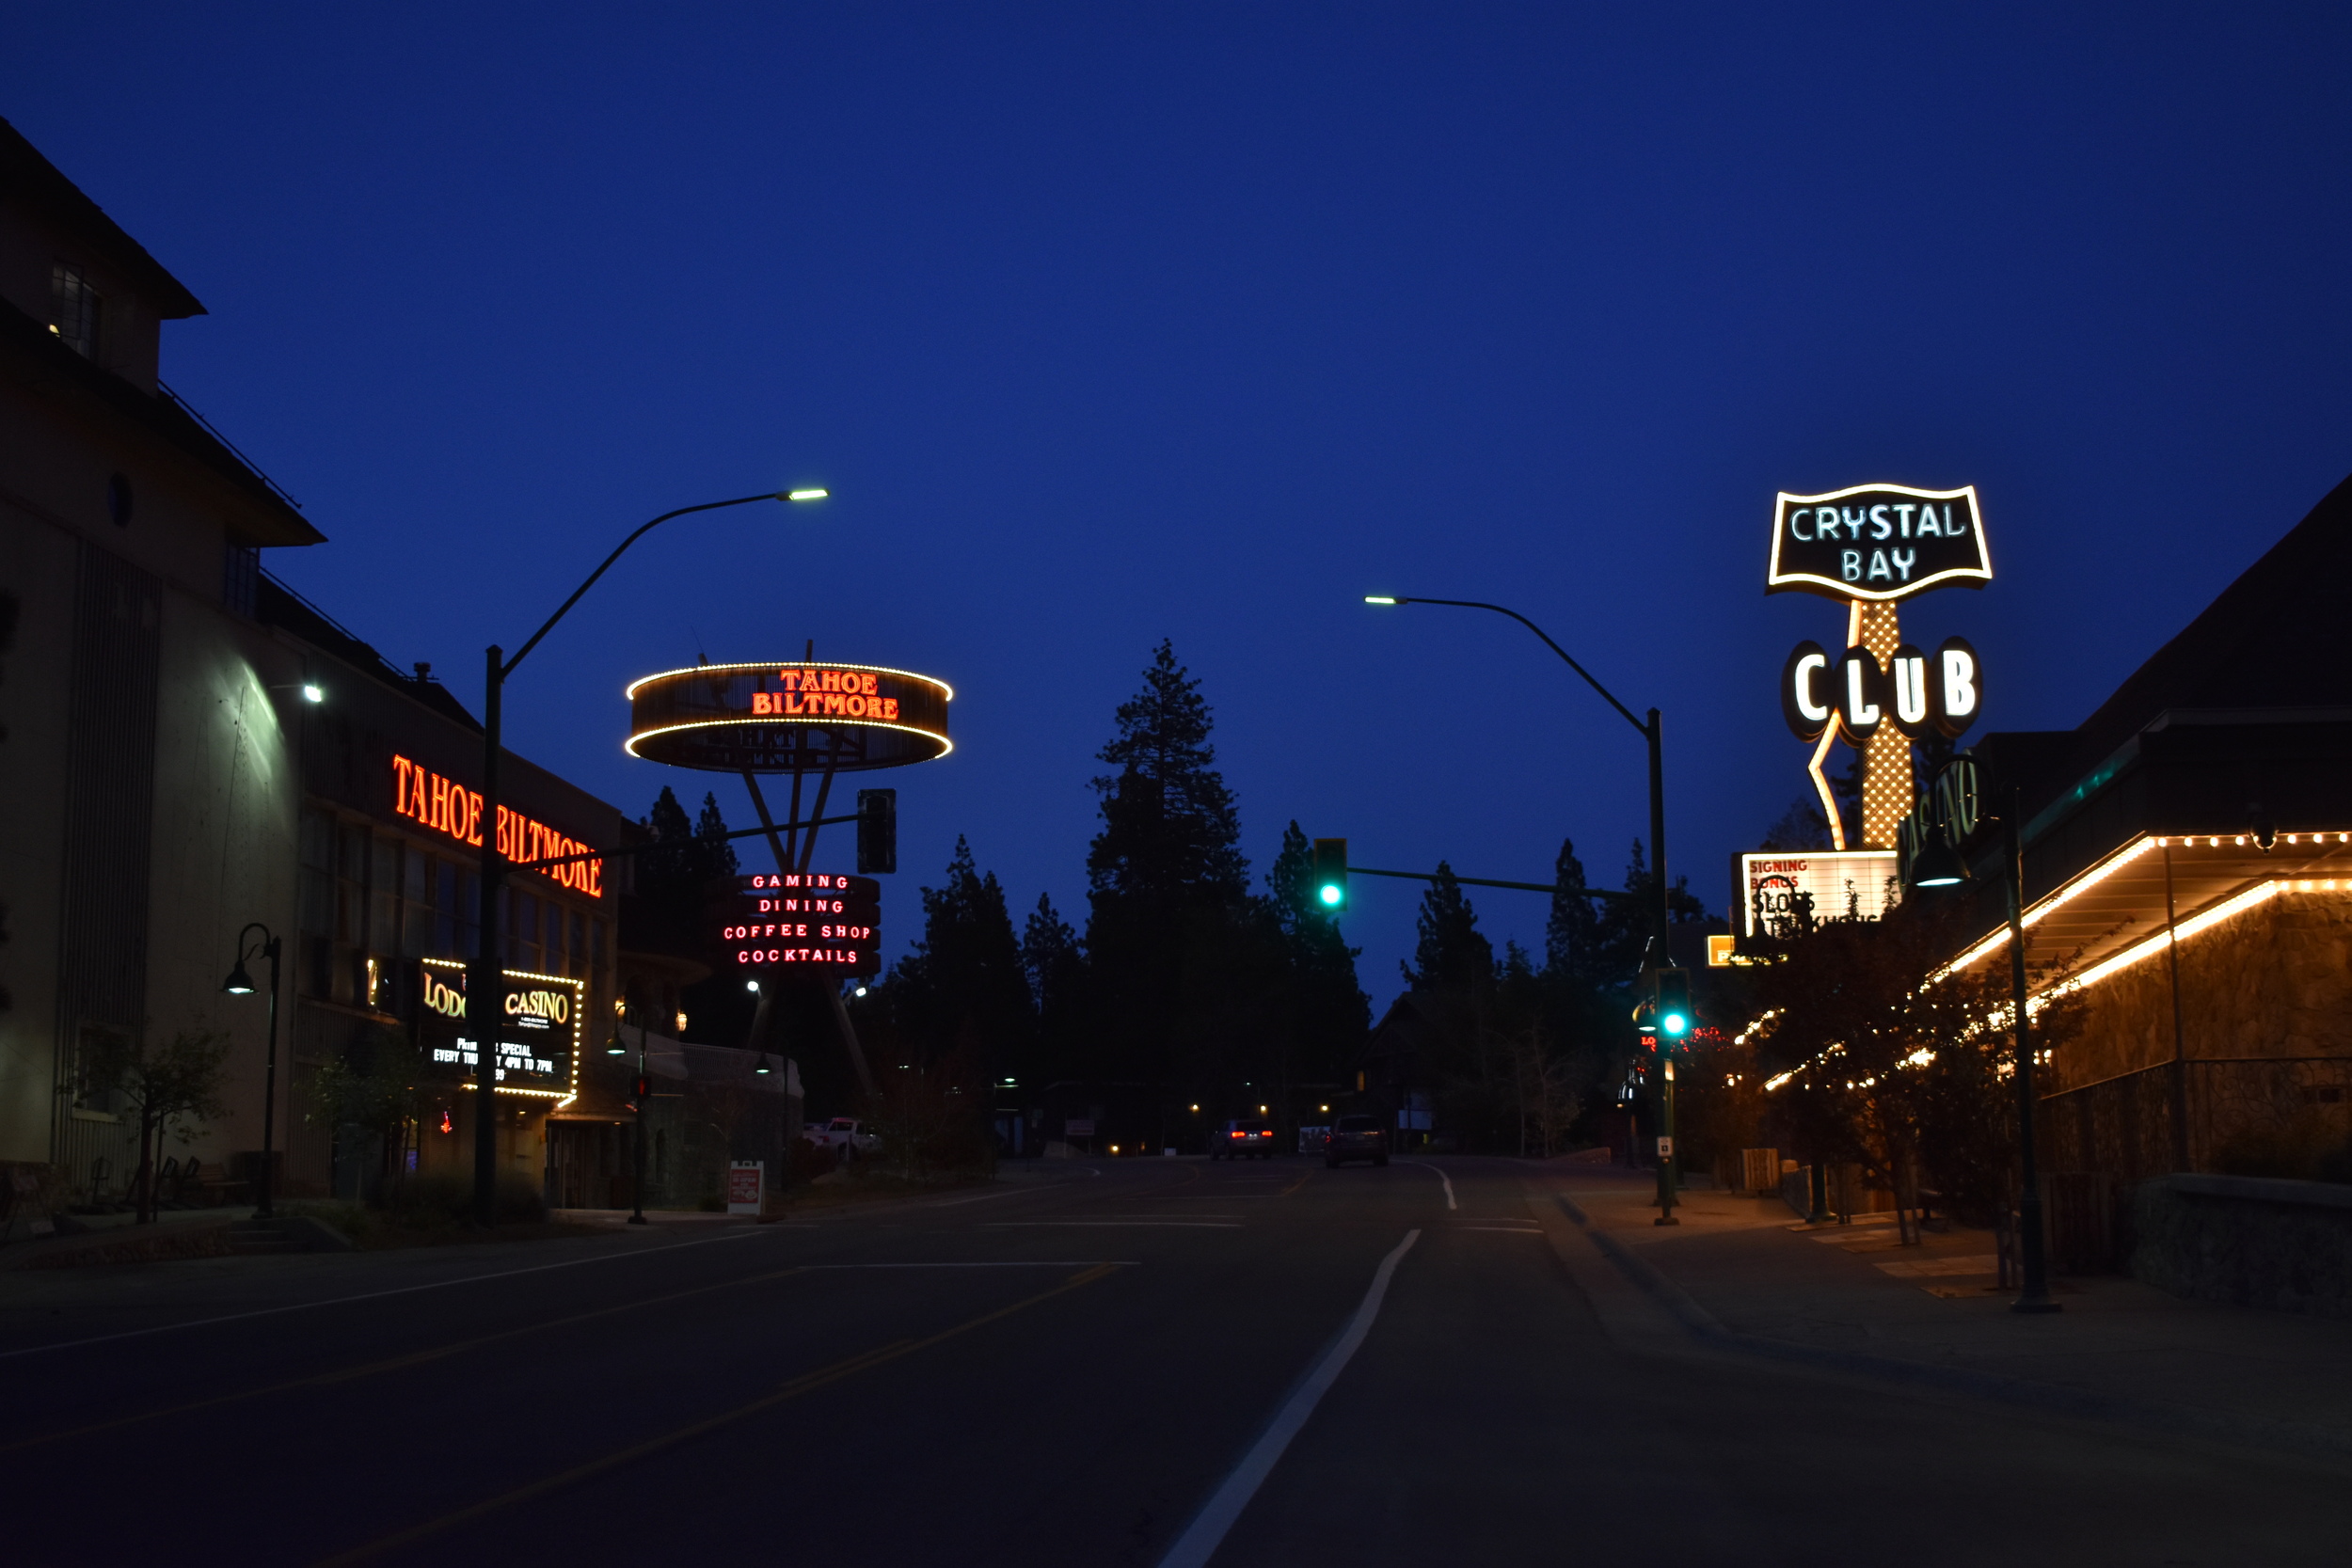 Tahoe Biltmore Lodge & Casino and Crystal Bay Club signs, Crystal Bay, Nevada